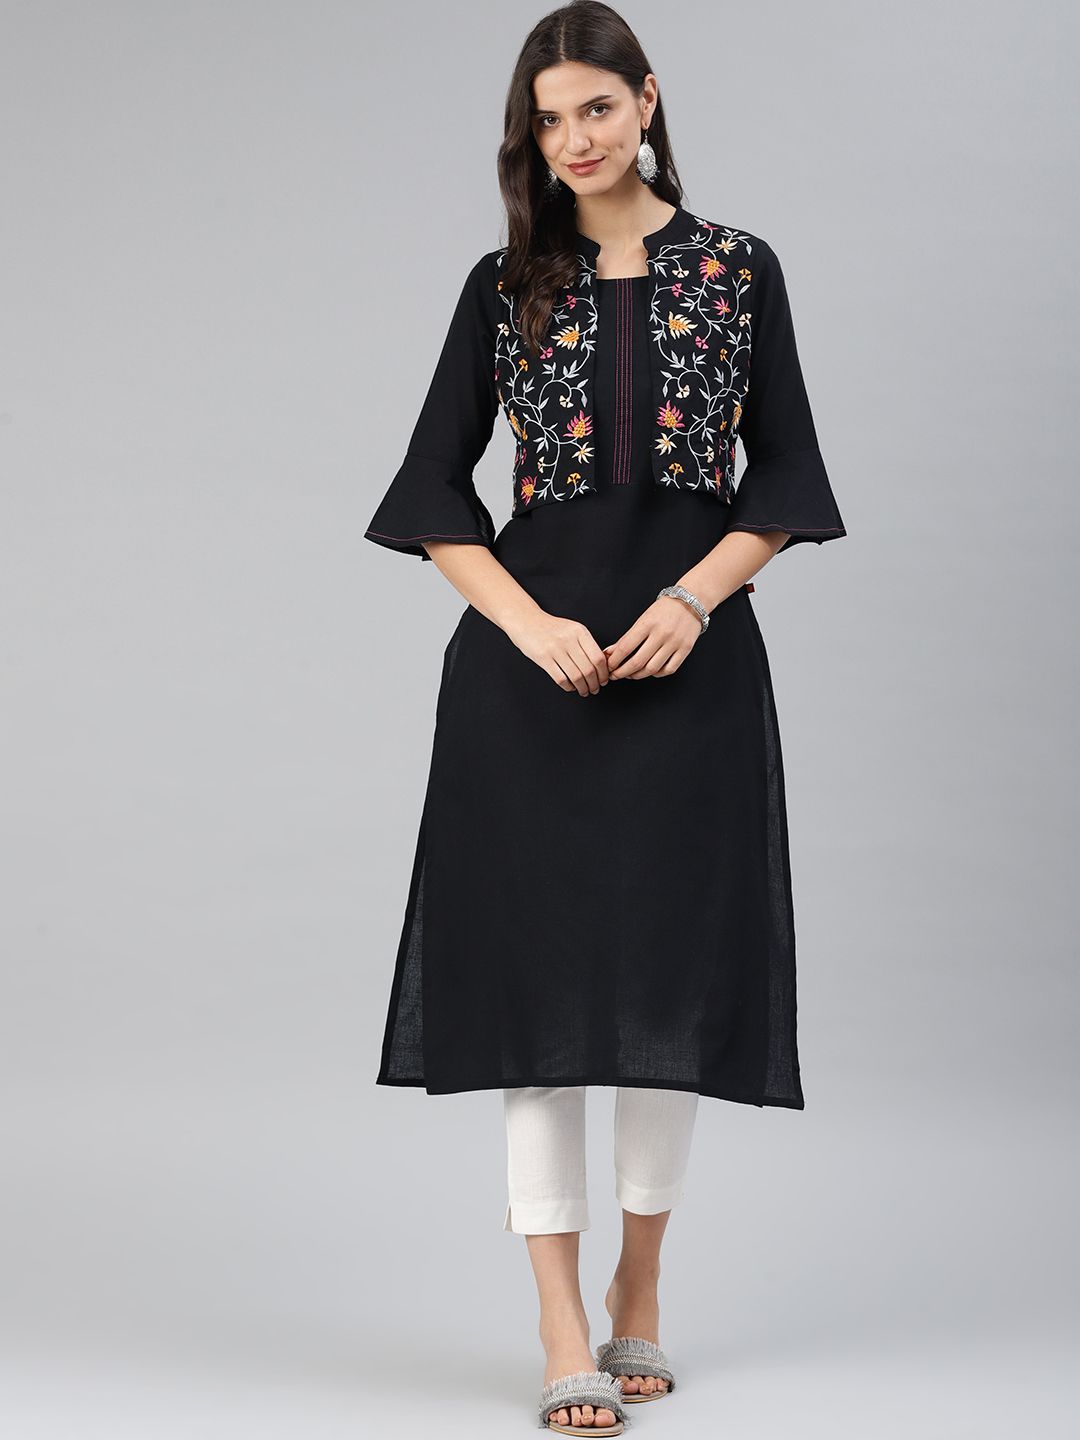     			Alena - Black Cotton Women's Jacket Style Kurti